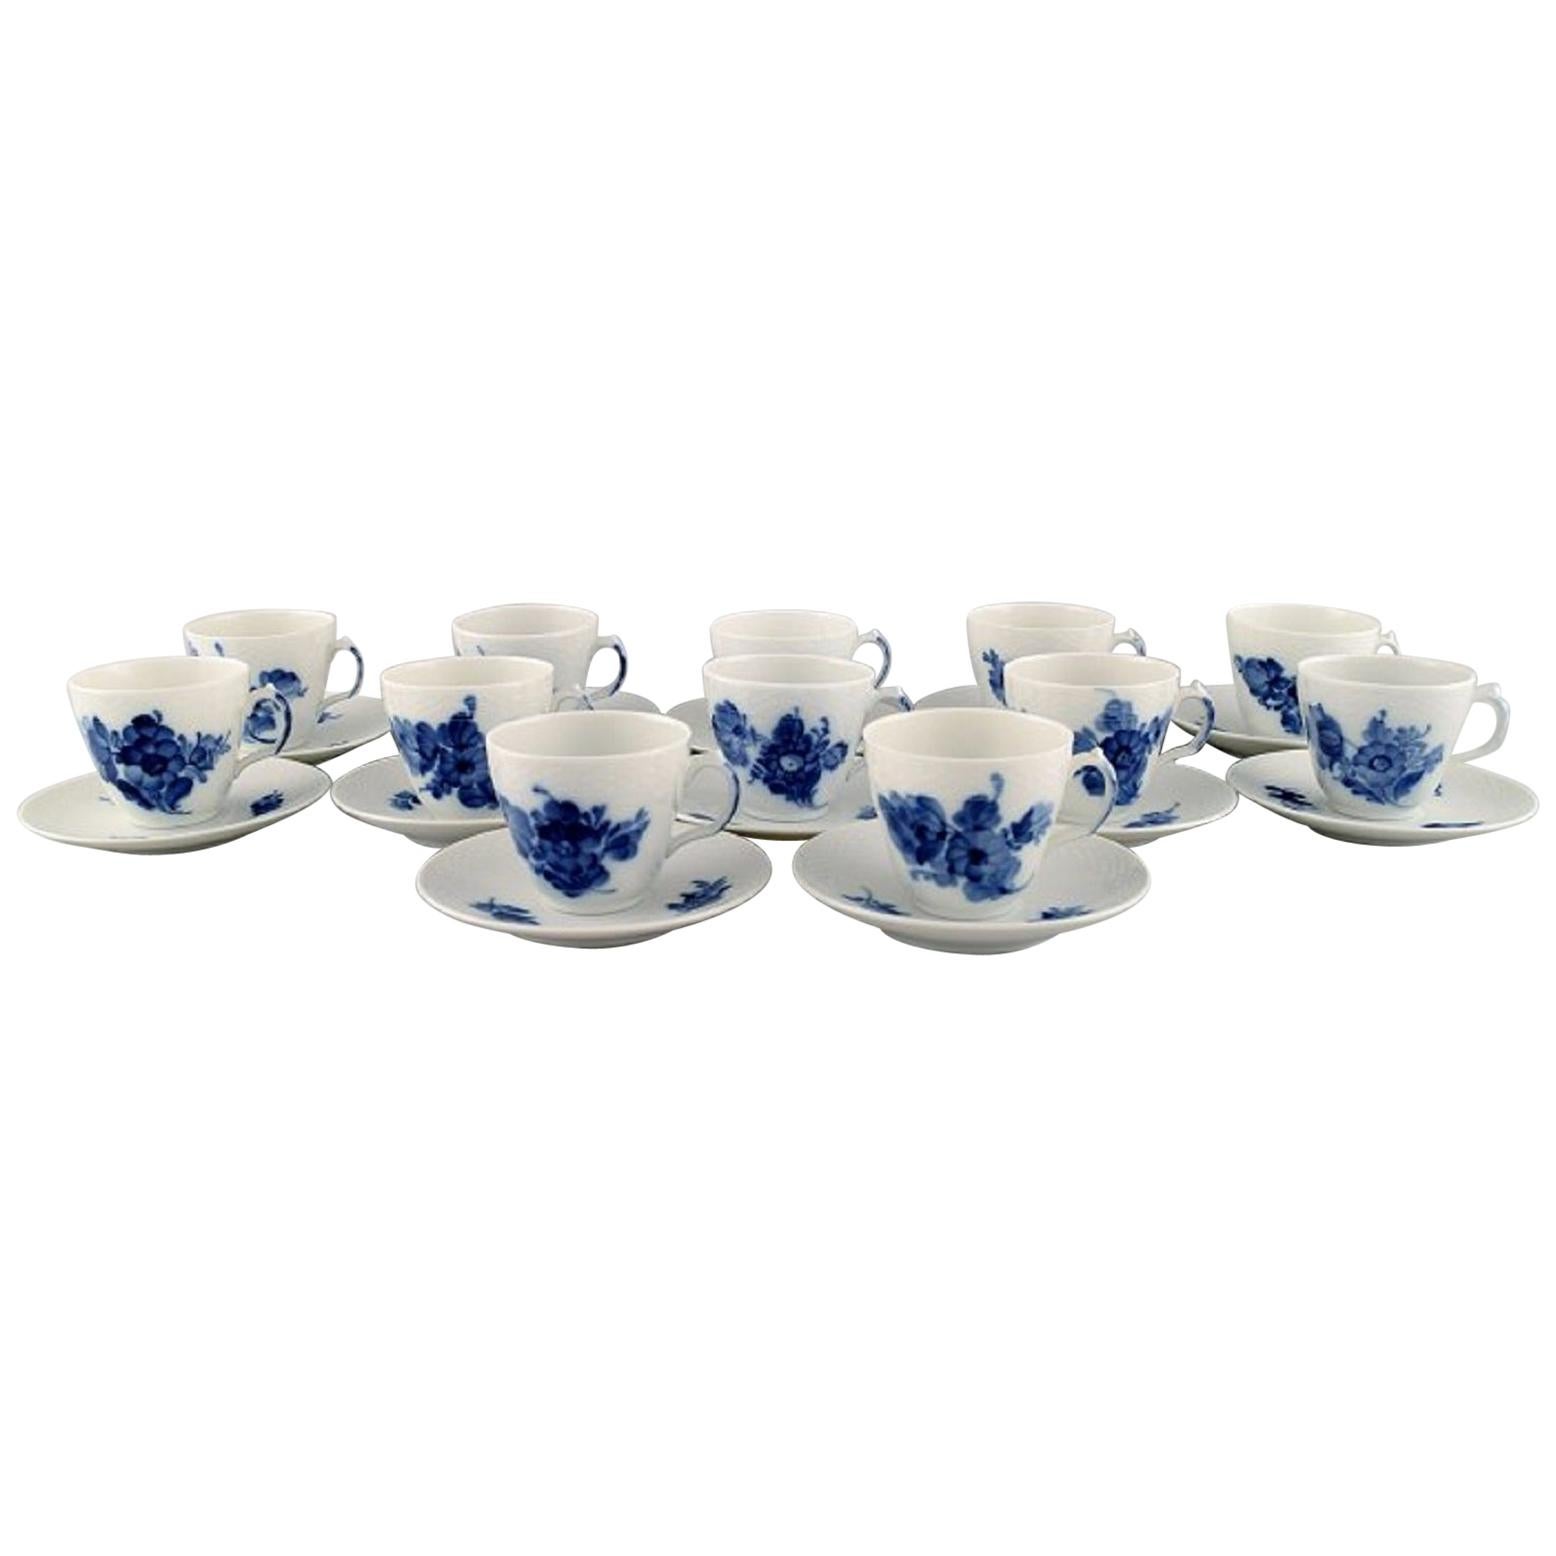 Twelve Royal Copenhagen Blue Flower Curved Espresso Cups with Saucers, 1980s